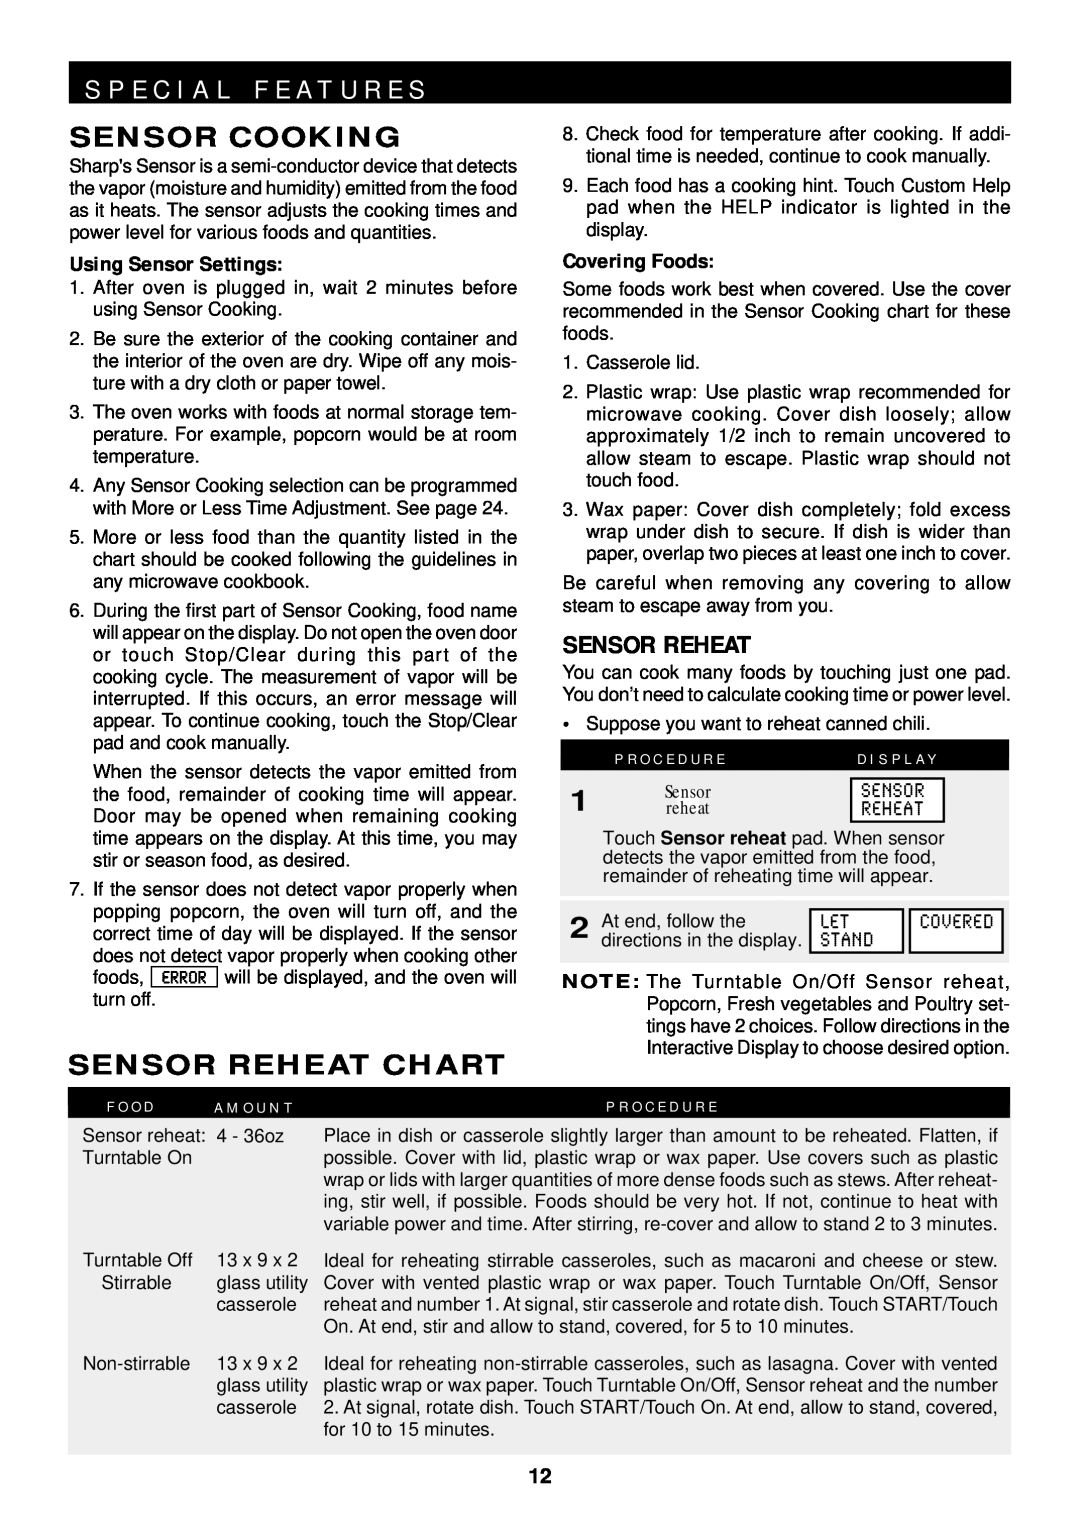 Sharp R-1612 Sensor Cooking, Sensor Reheat Chart, P R O C E D U R E, Using Sensor Settings, Covering Foods, D I S P L A Y 